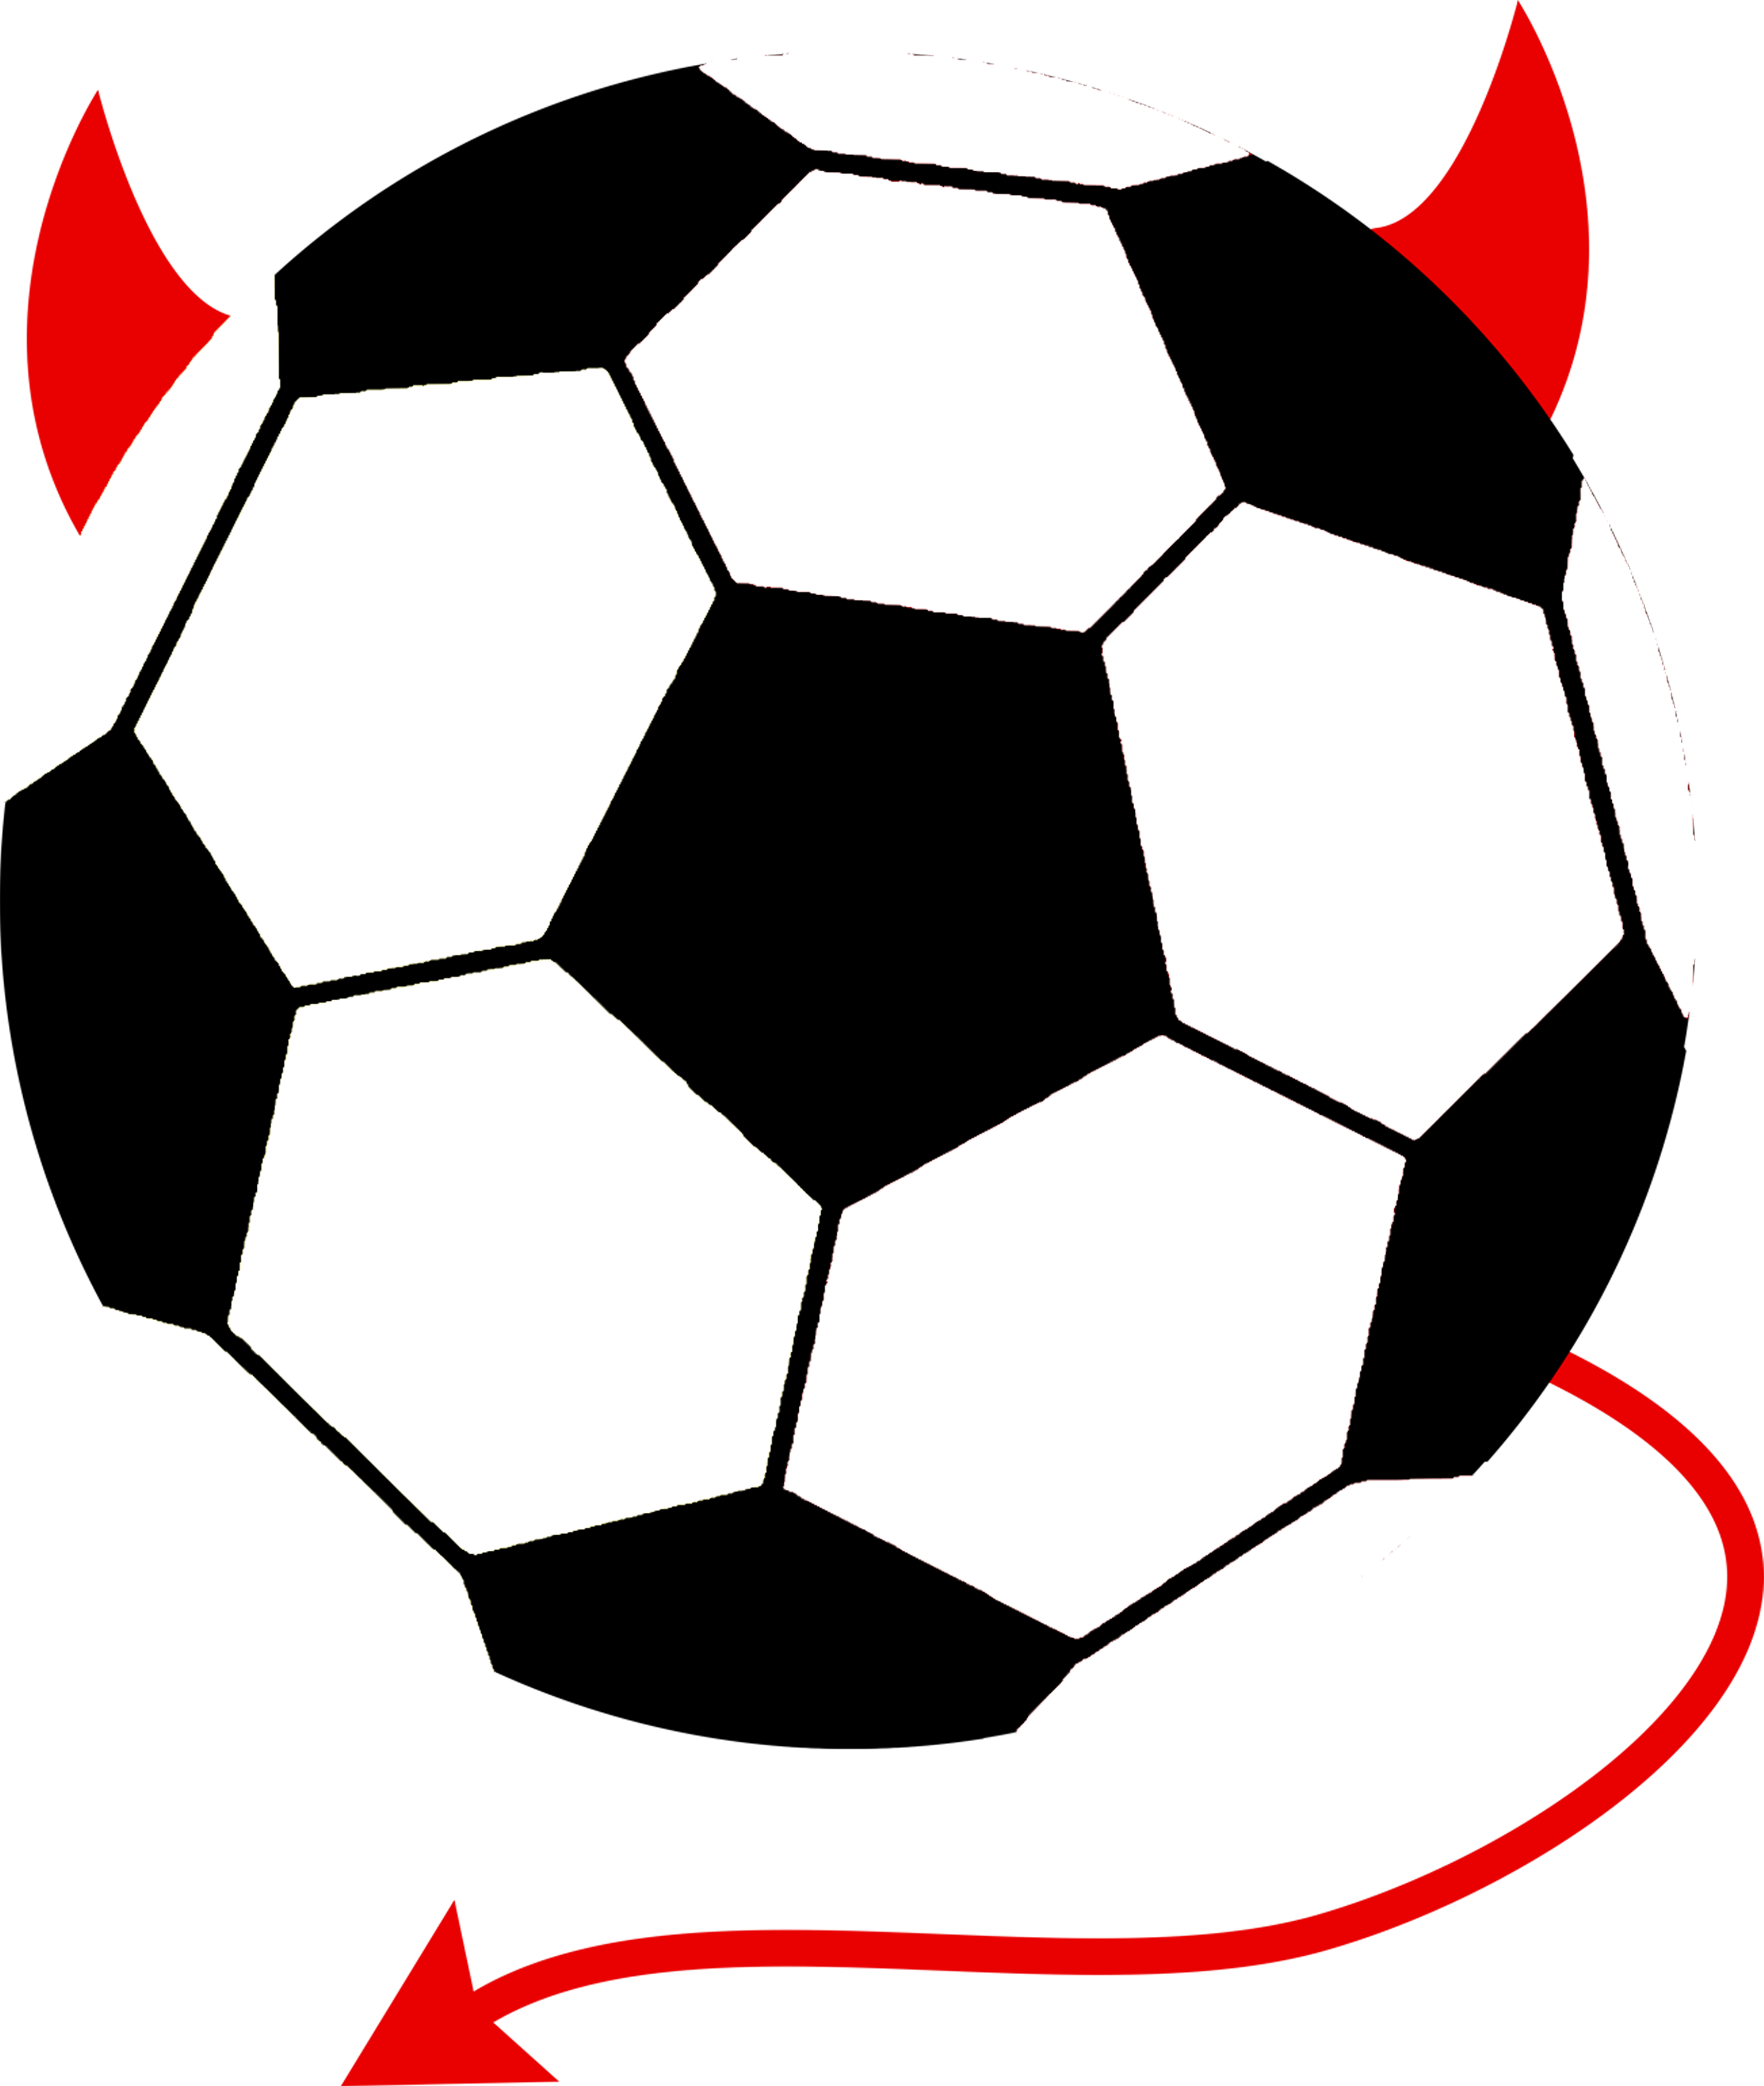 Soccer Ball - Maccabi Tel Aviv F.c. (2966x3508)